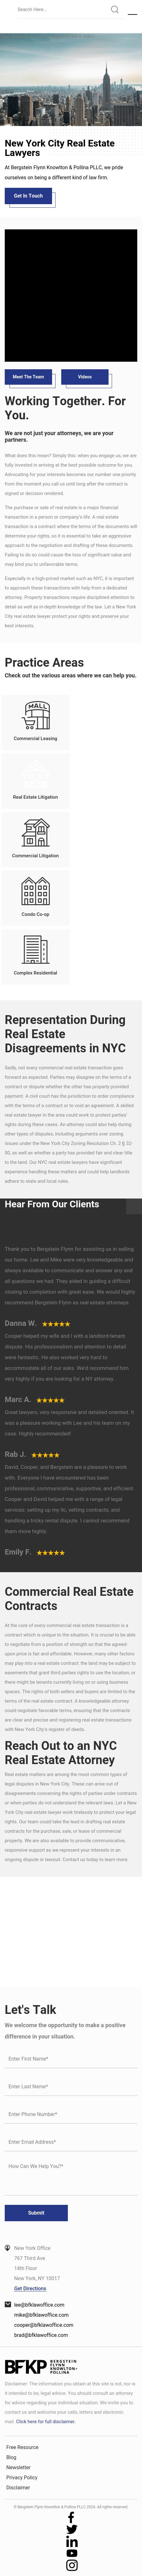 Bergstein Flynn Knowlton & Pollina PLLC - New York NY Lawyers